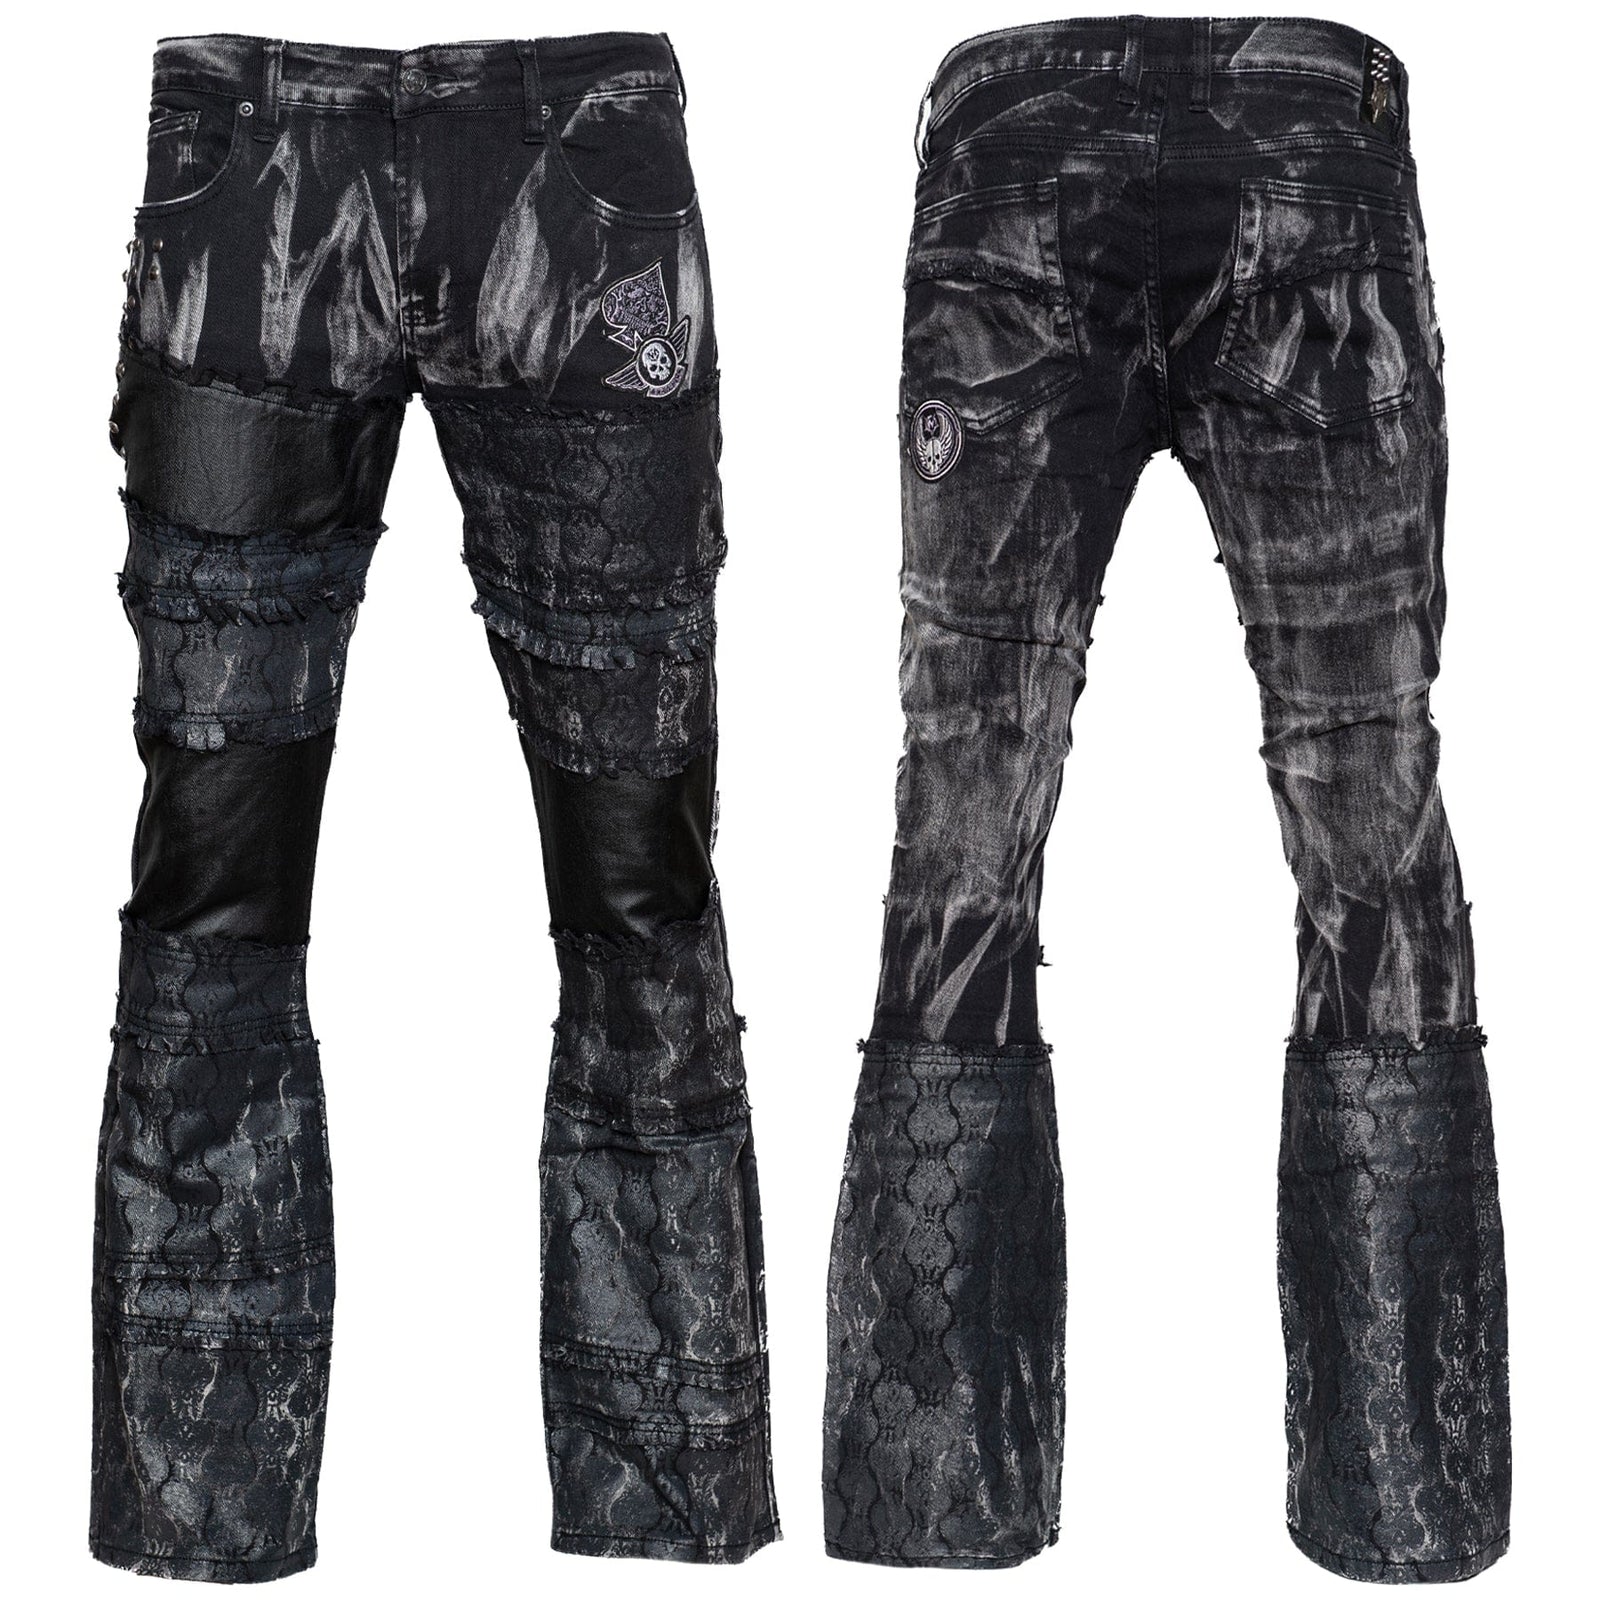 Custom Chop Shop Pants Wornstar Custom Jeans - Nightfall - Ready to ship - Size 36